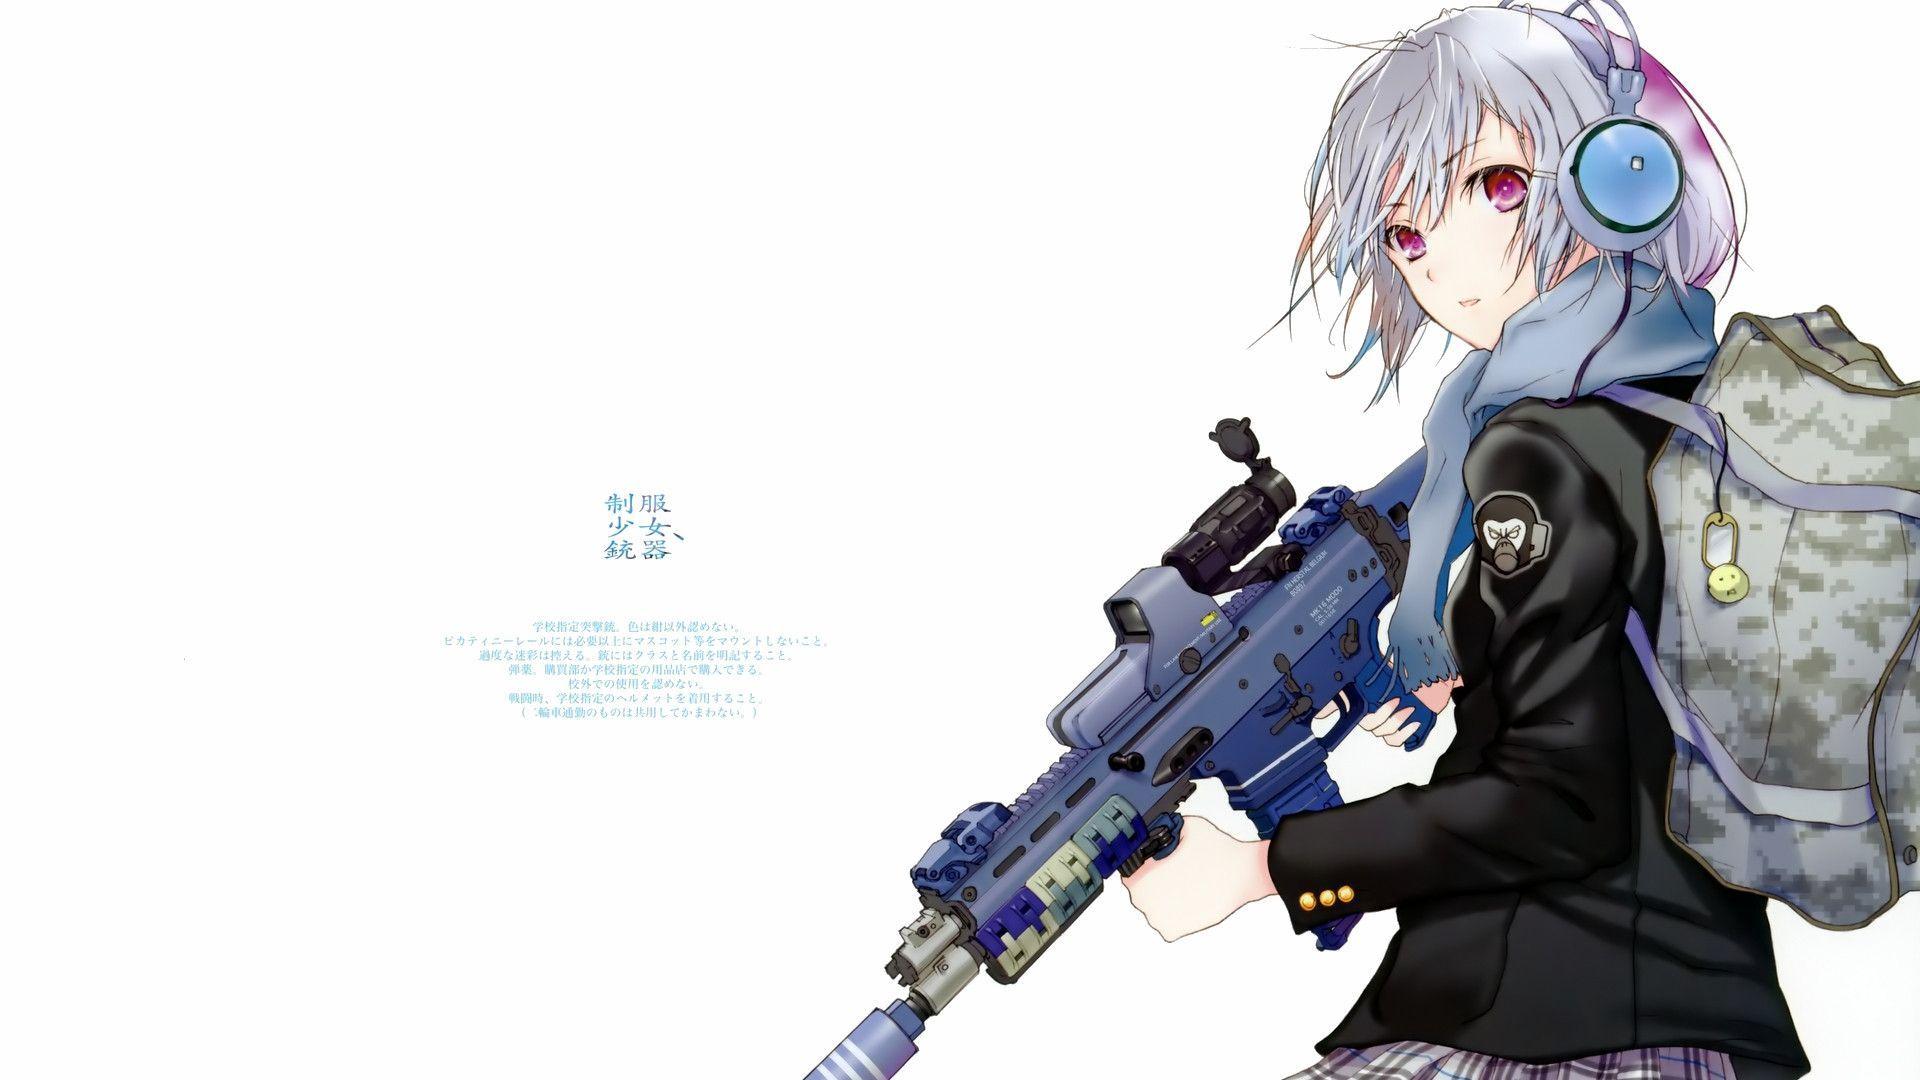 Anime sniper girl 797873 2880x1800px high def desktop background